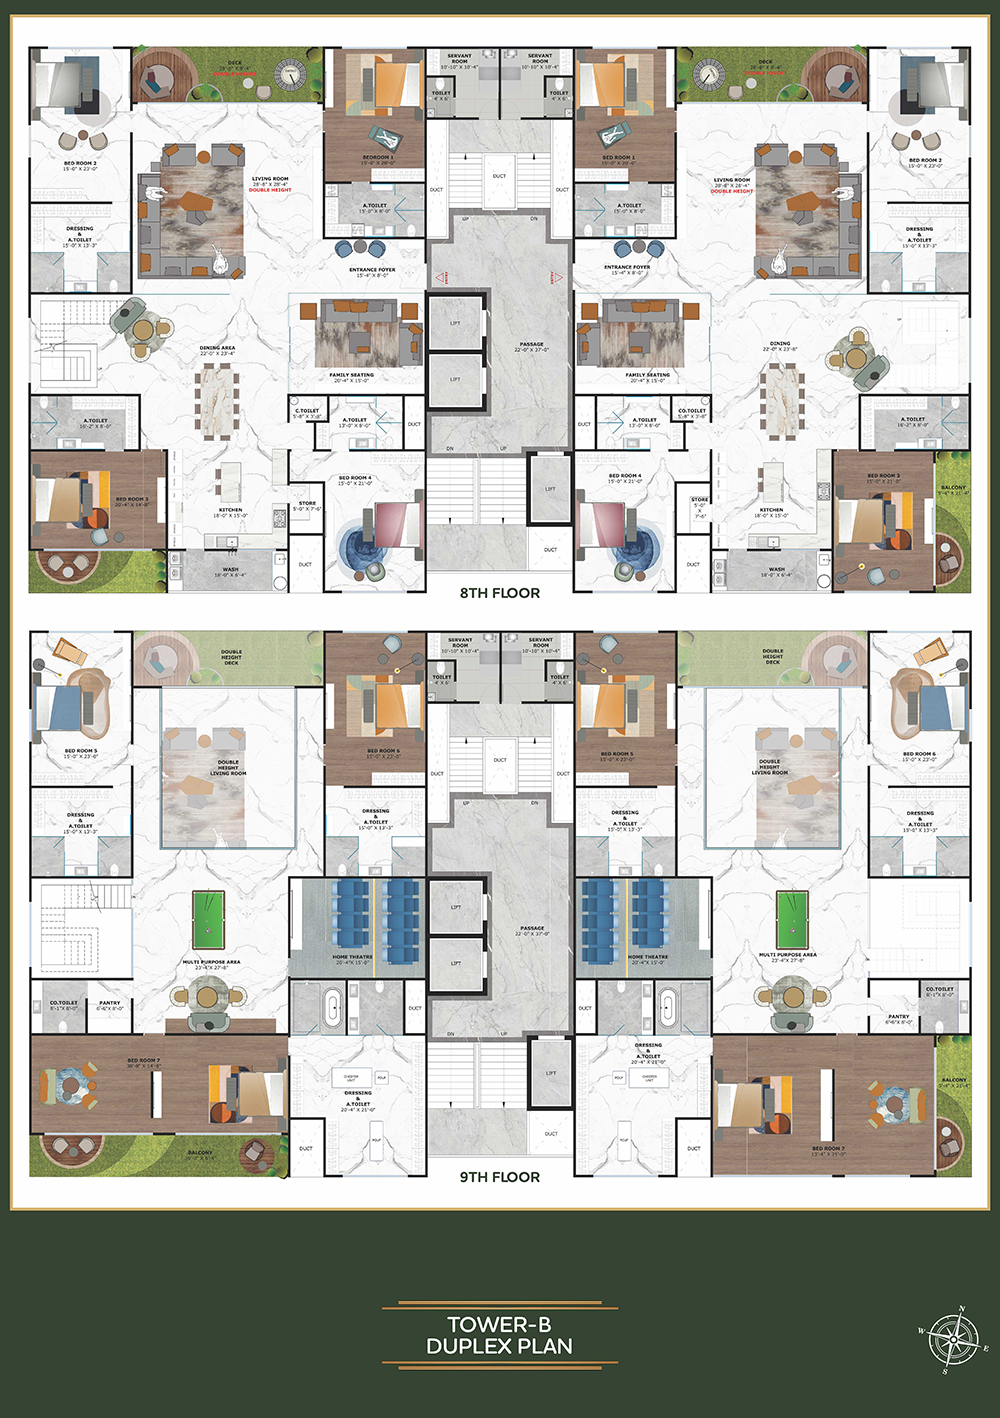 Tower B - Duplex Plan